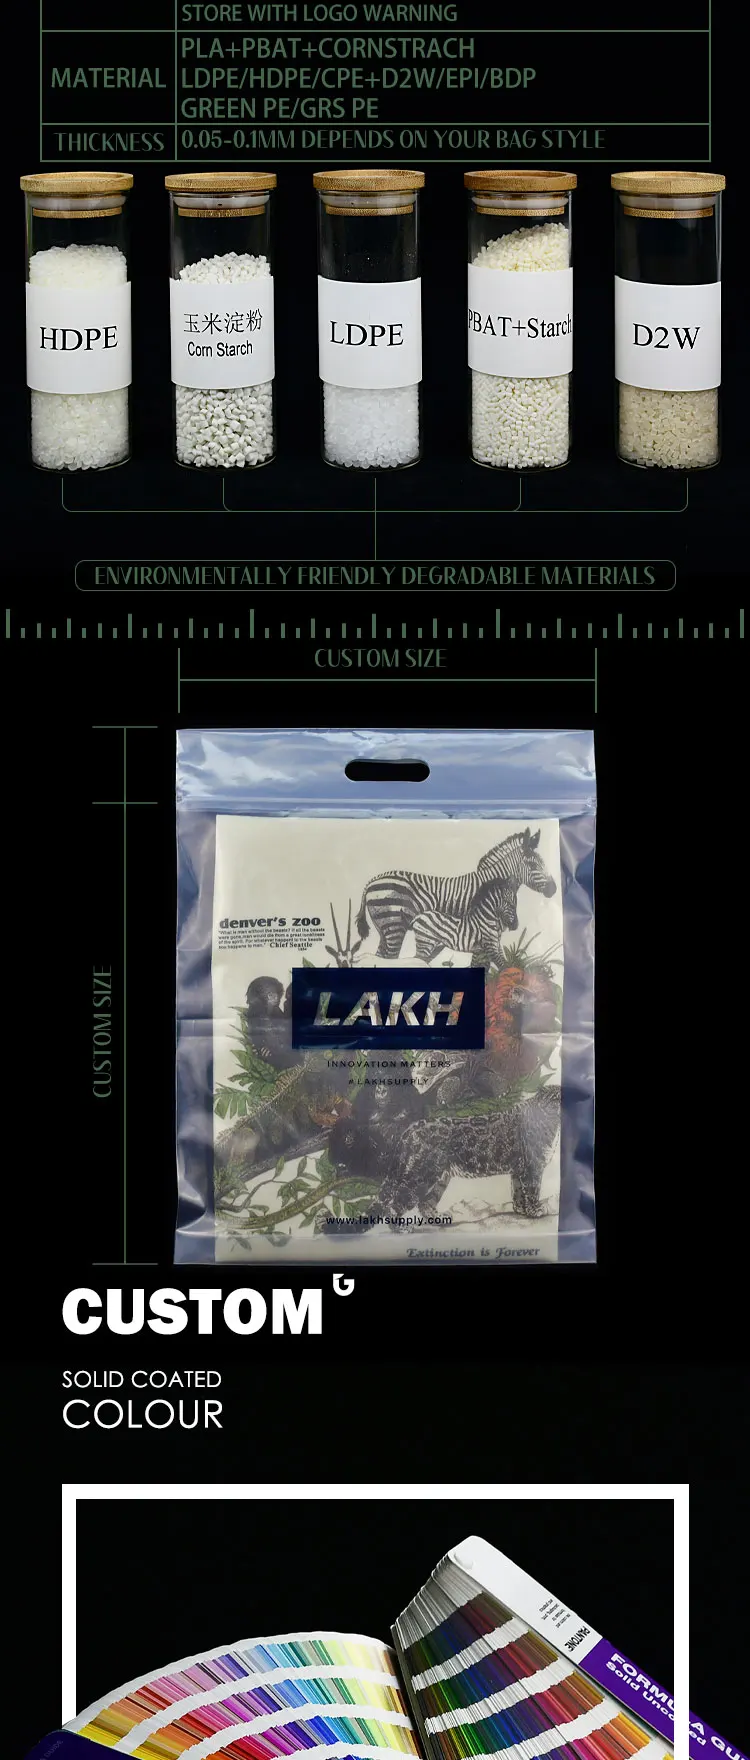 Custom biodegradable transparent bag clear plastic zip lock packaging bags with handles logo warning customized details